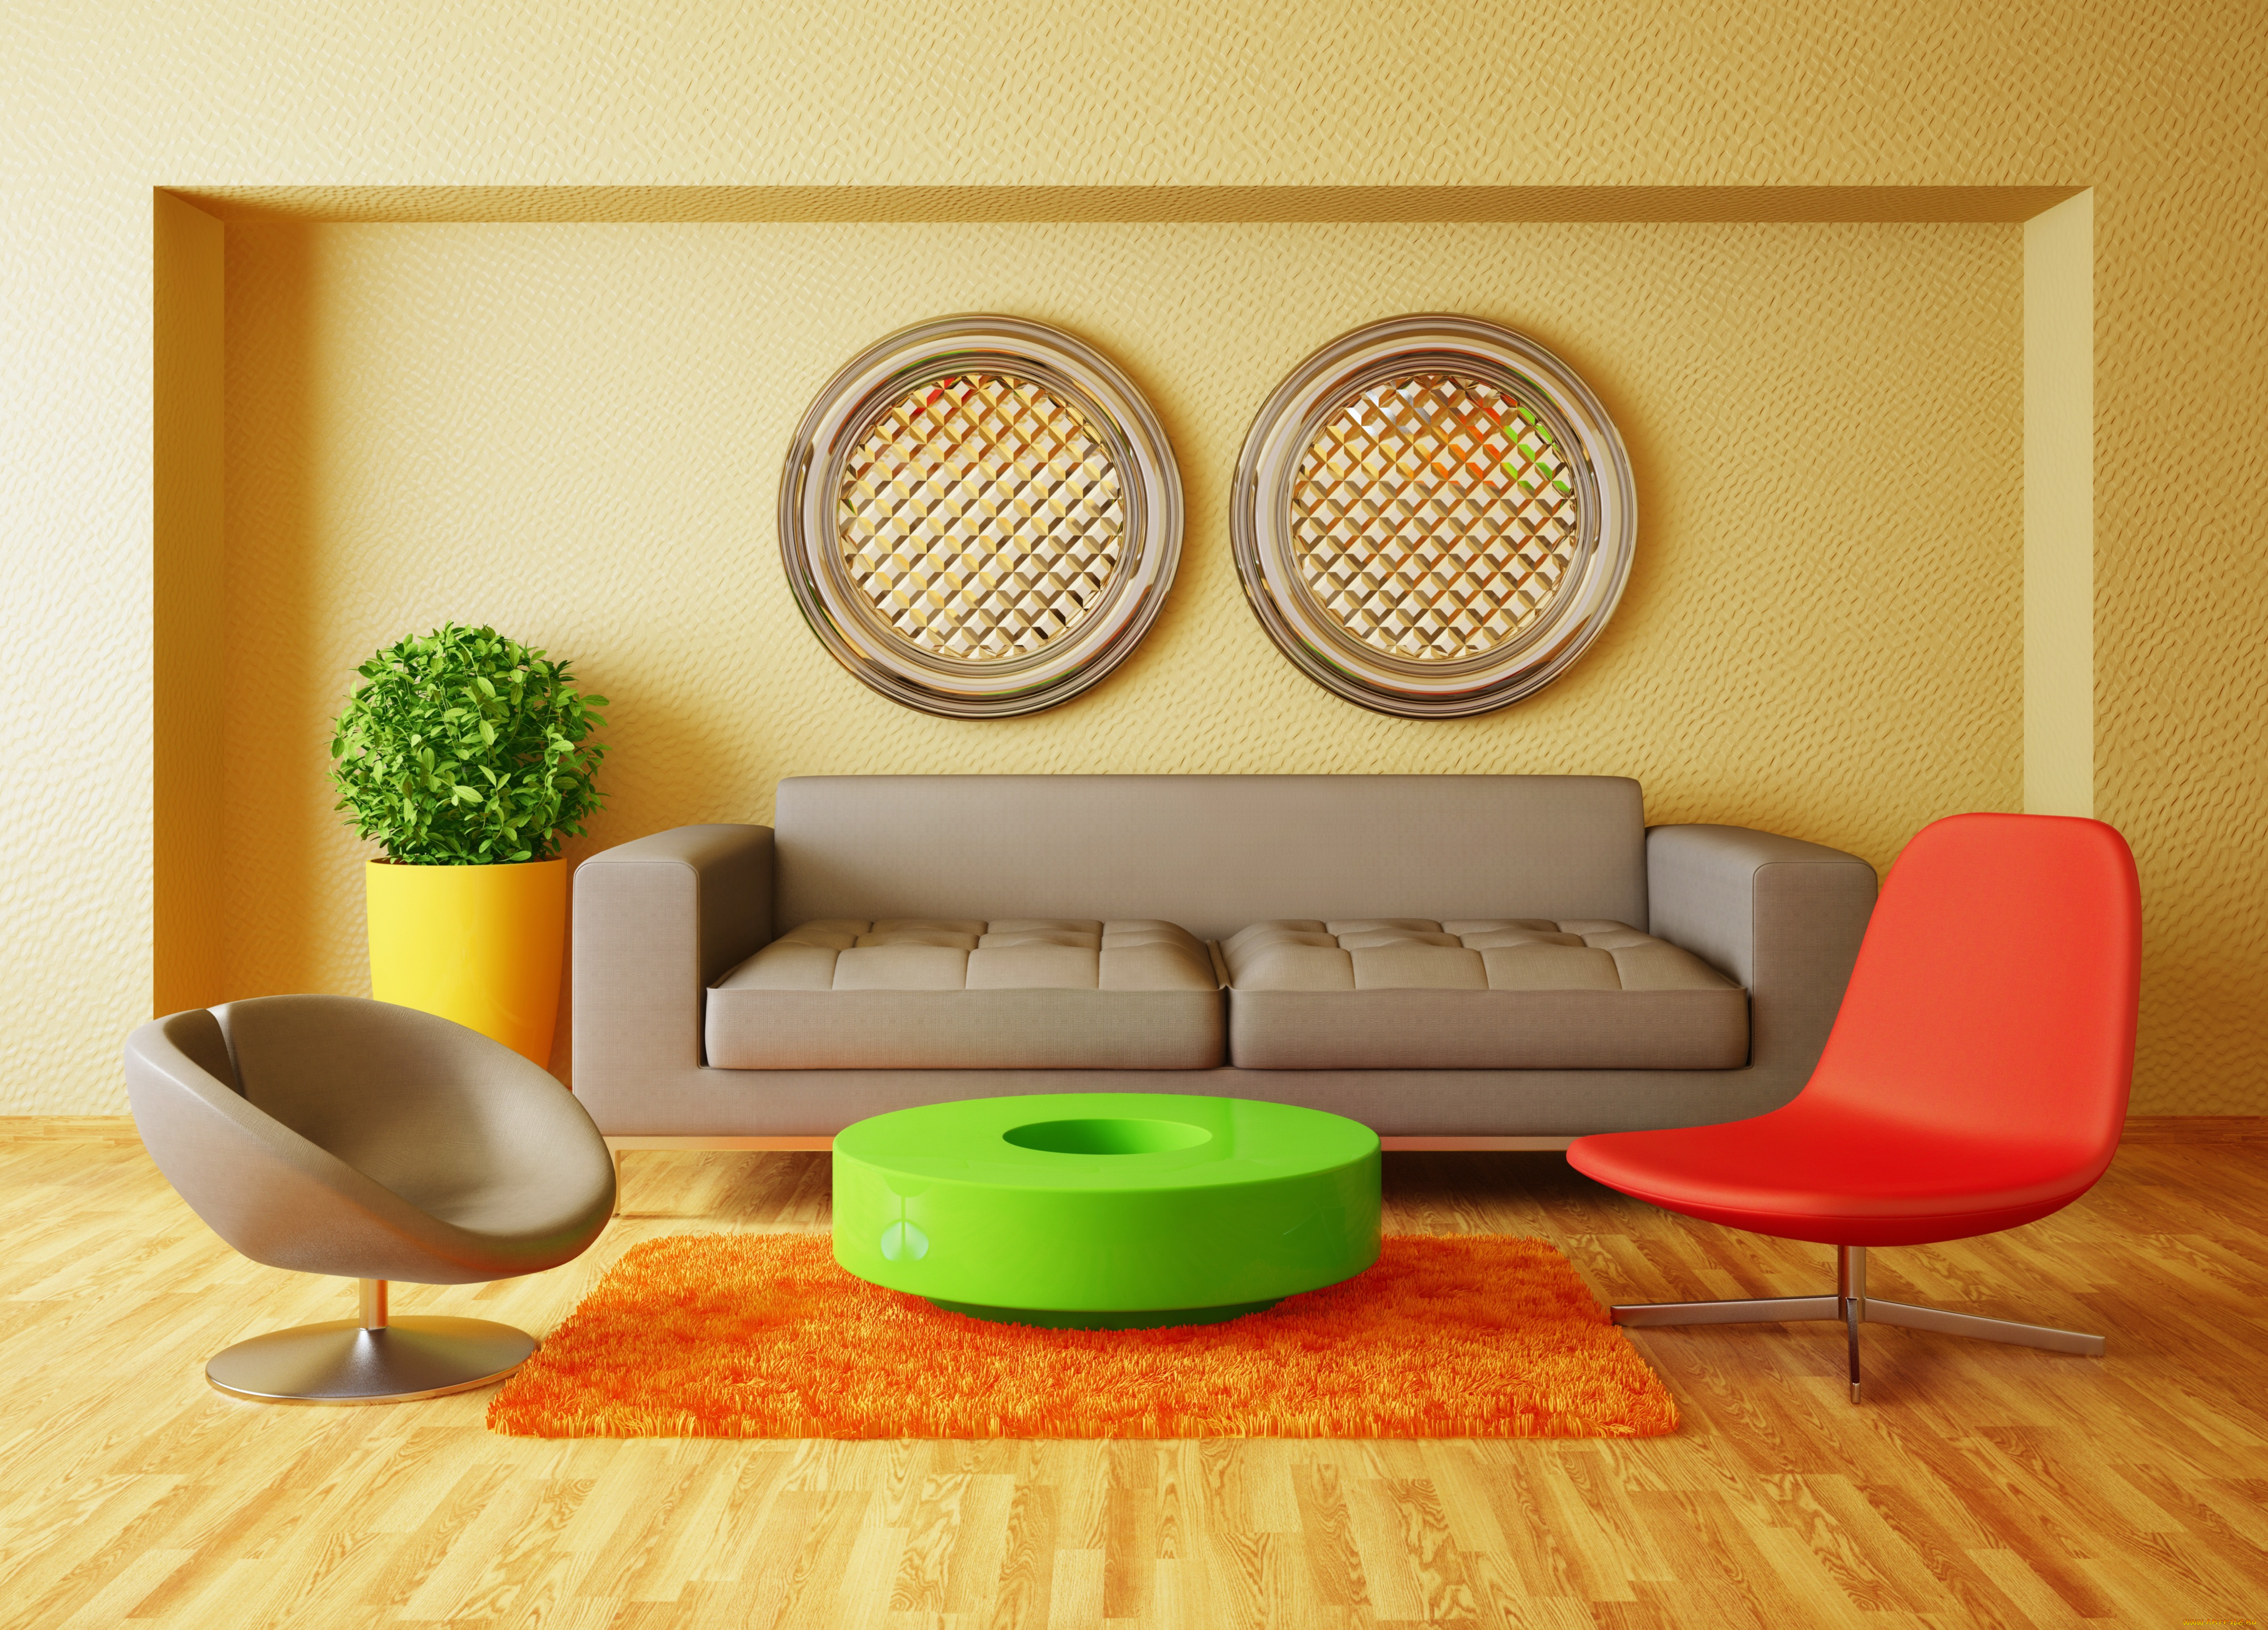 3д, графика, реализм, , realism, interior, room, modern, гостиная, кресла, мебель, диван